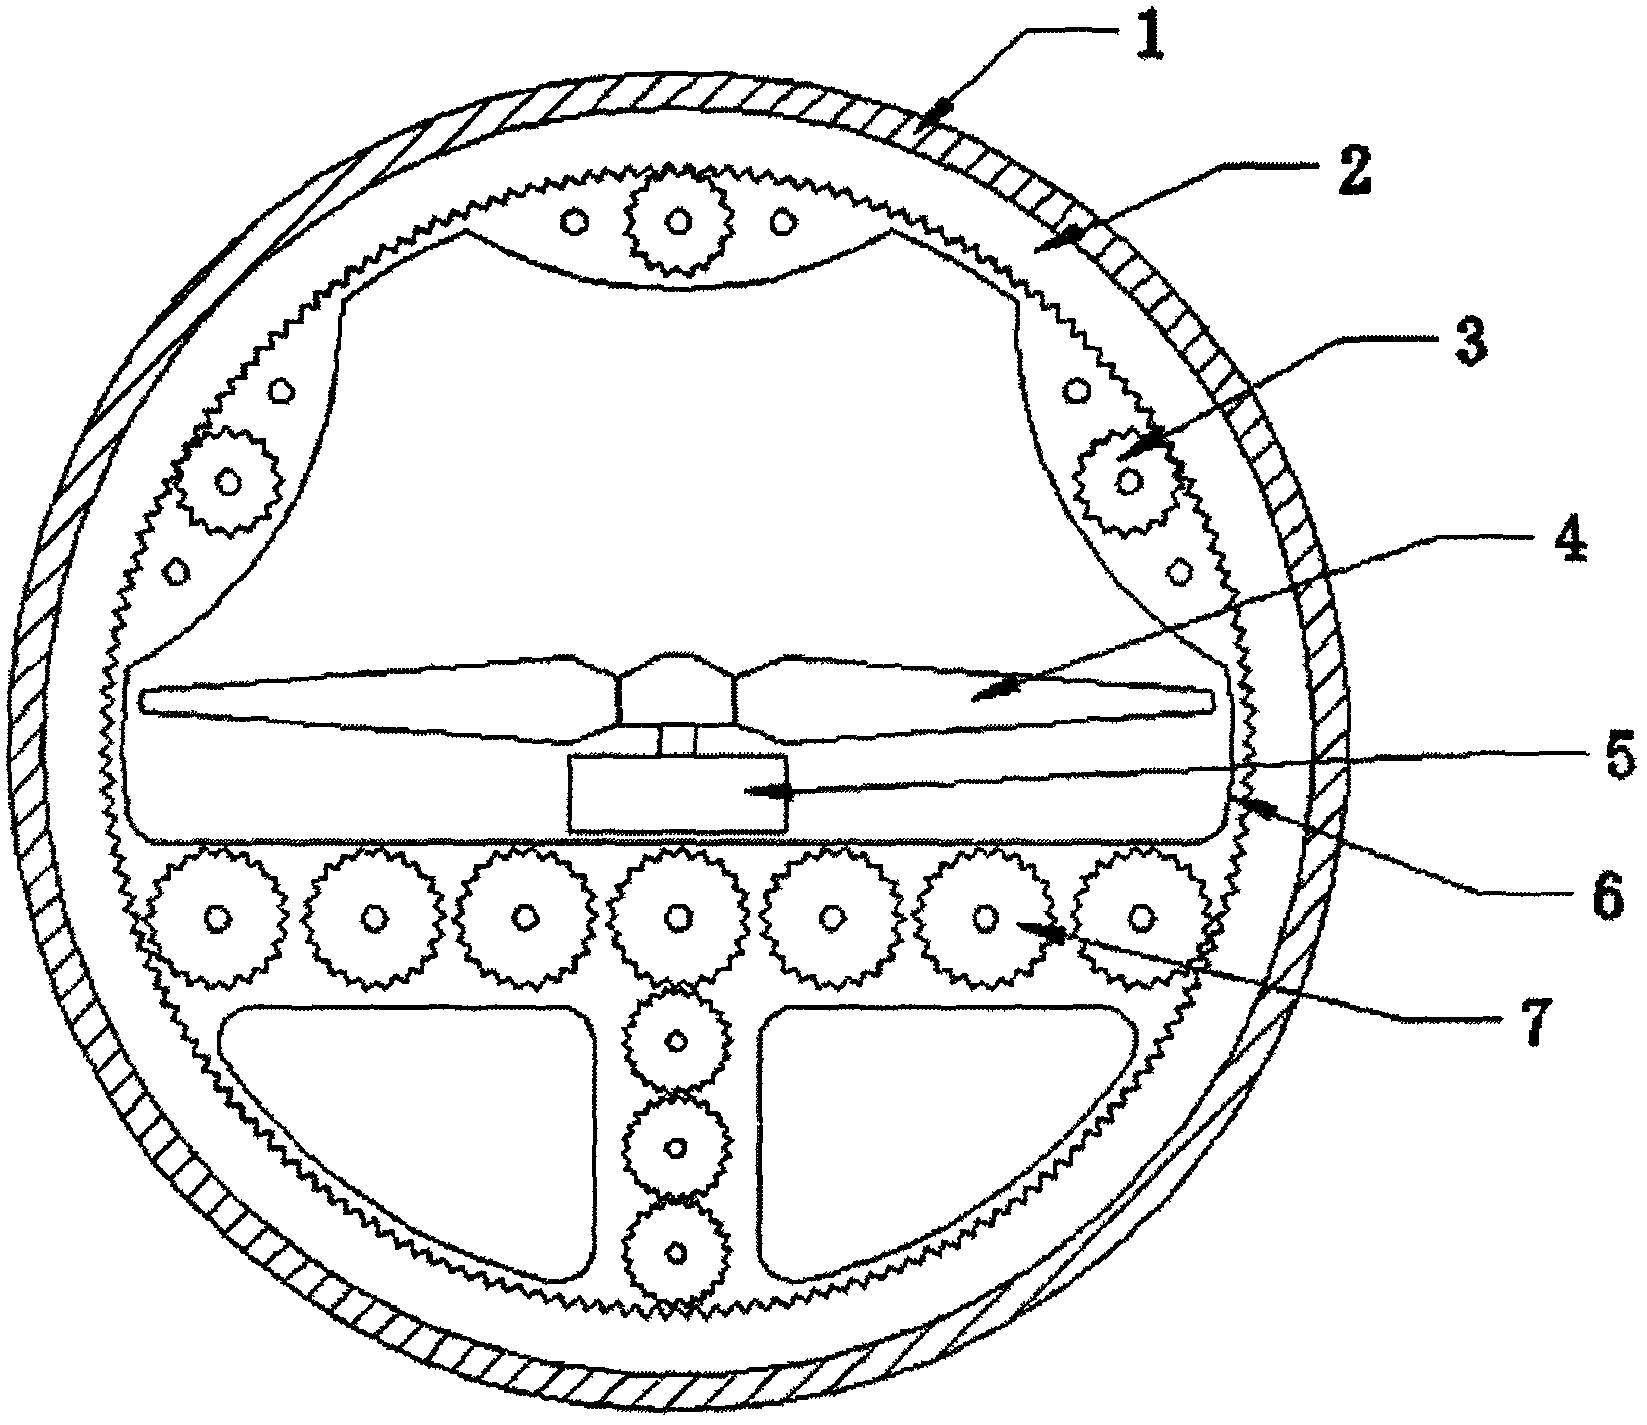 Novel circular rail type hollow wheel and aerocar system